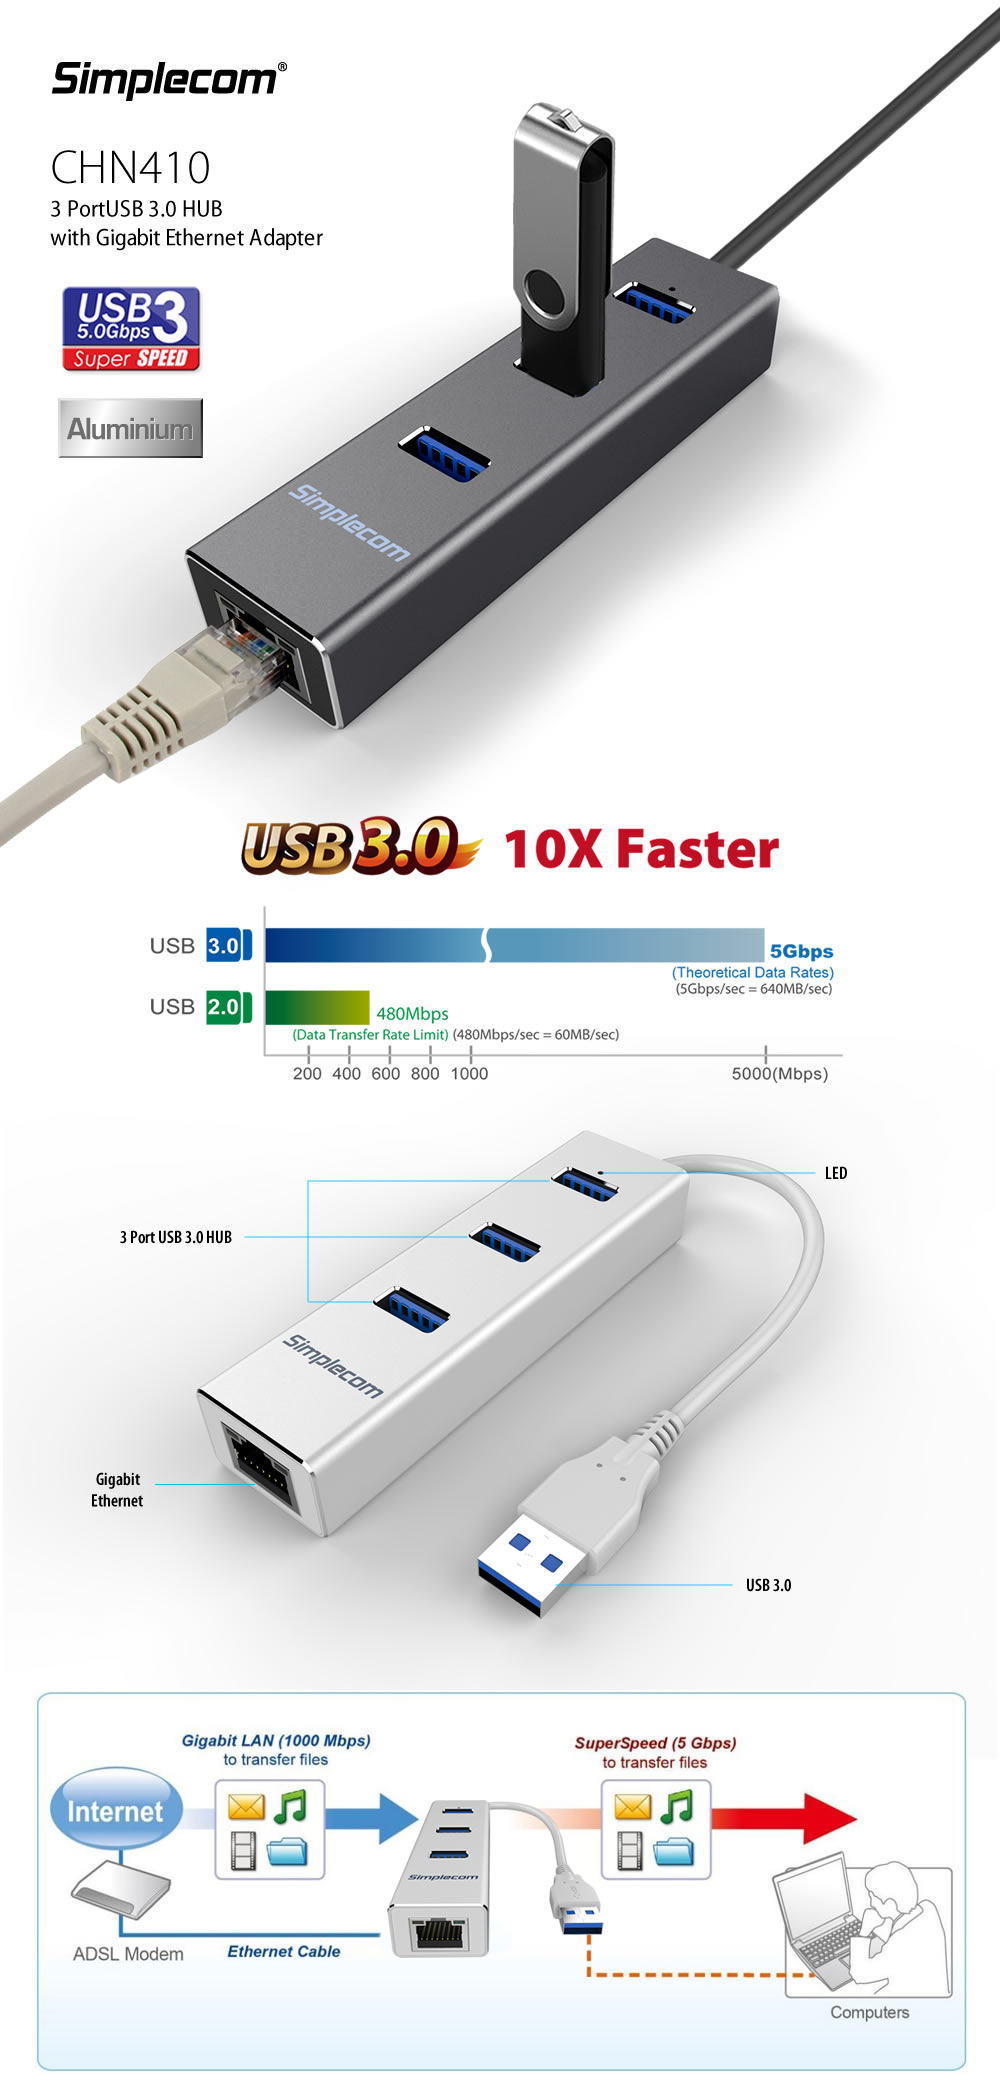 Simplecom CHN410 Aluminium 3 Port USB 3.0 HUB with Gigabit Ethernet Adapter 1000Mbps Silver 1